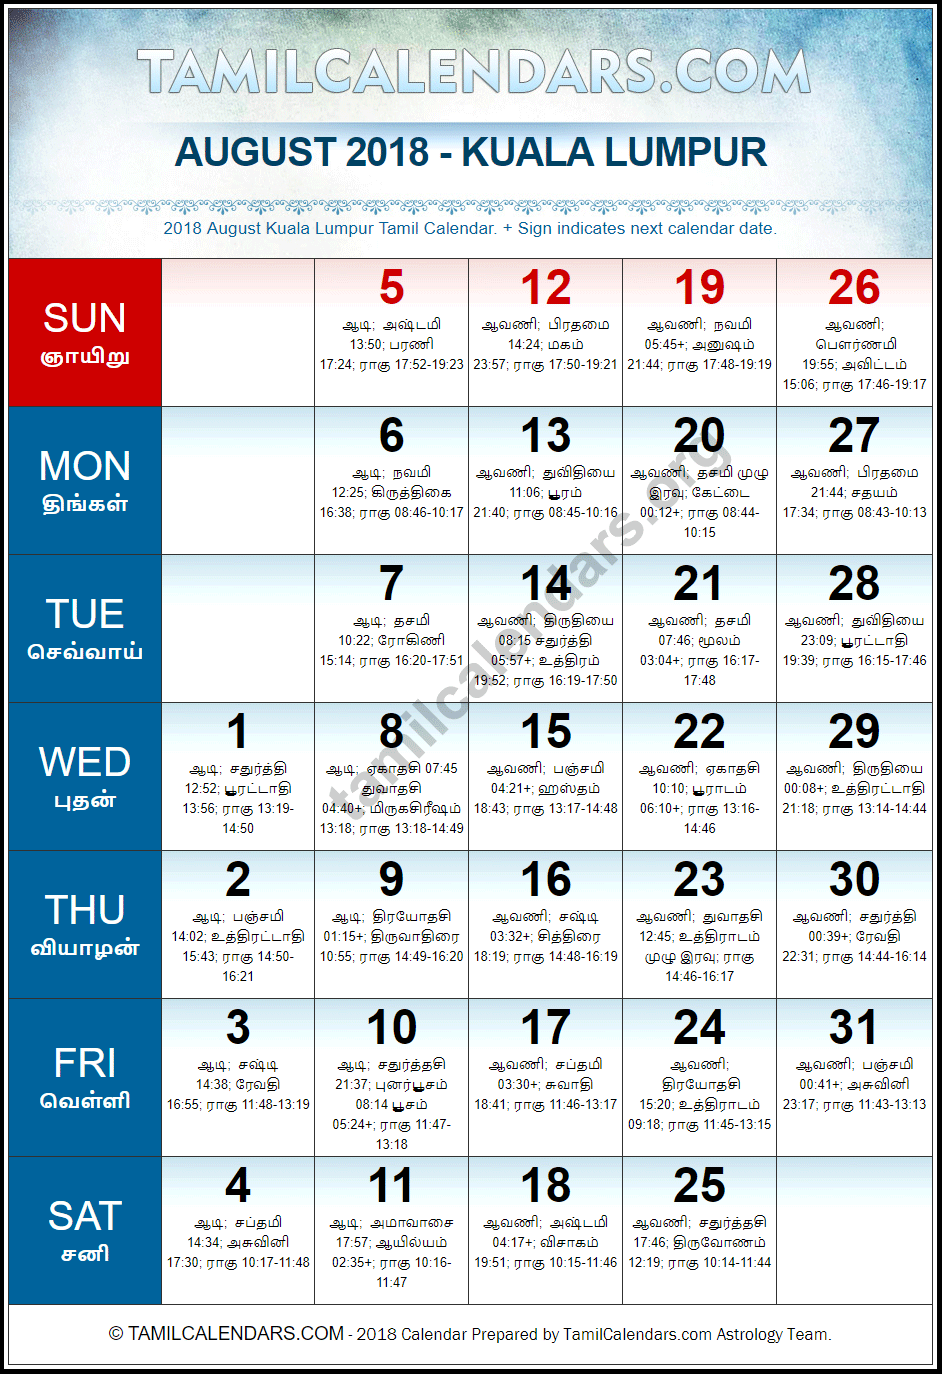 August 2018 Tamil Calendar for Malaysia (Kuala Lumpur)